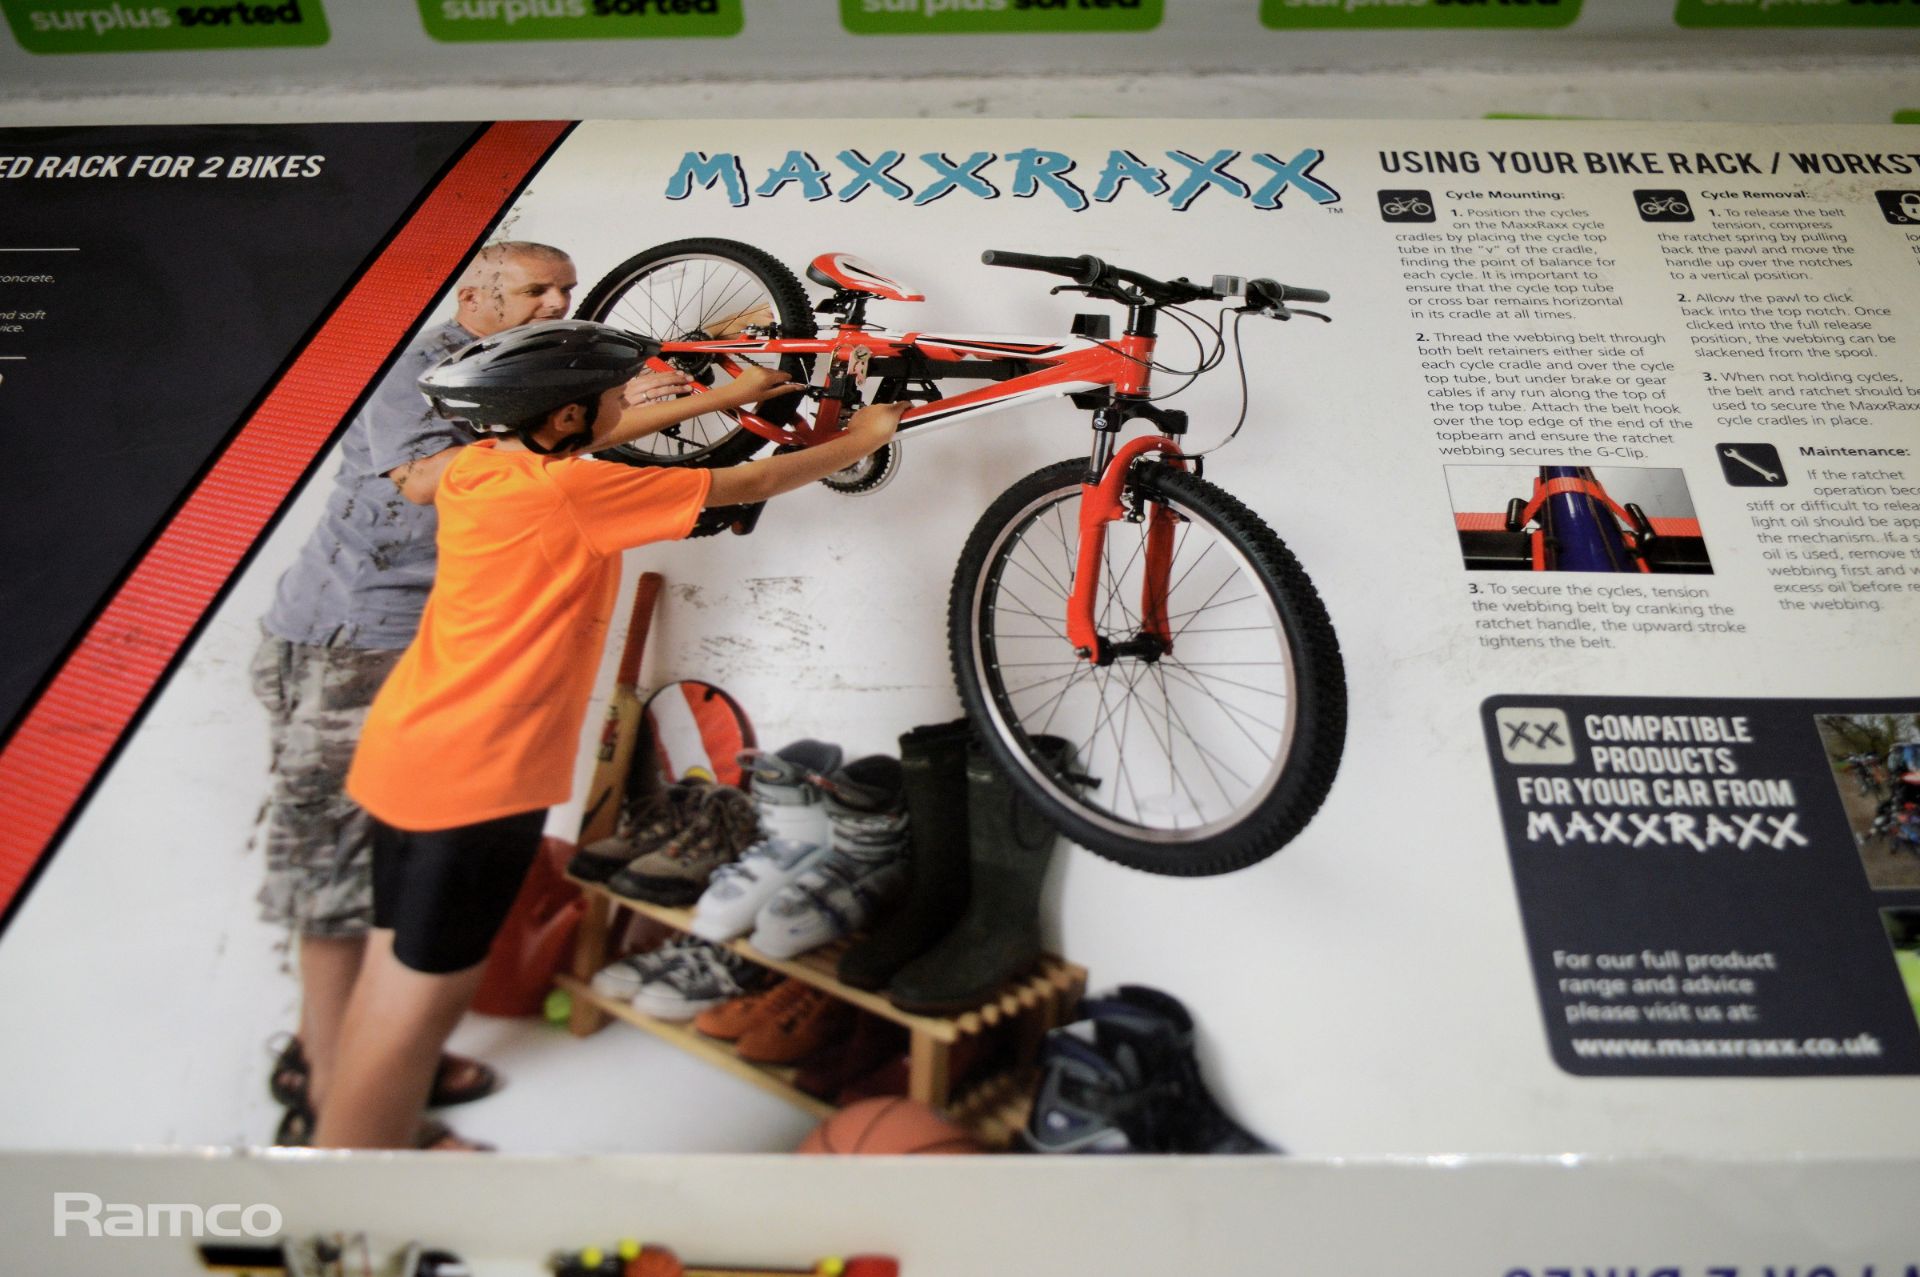 MaxxRaxx wall mounted bike rack & workstation for 2 bikes - Image 2 of 2